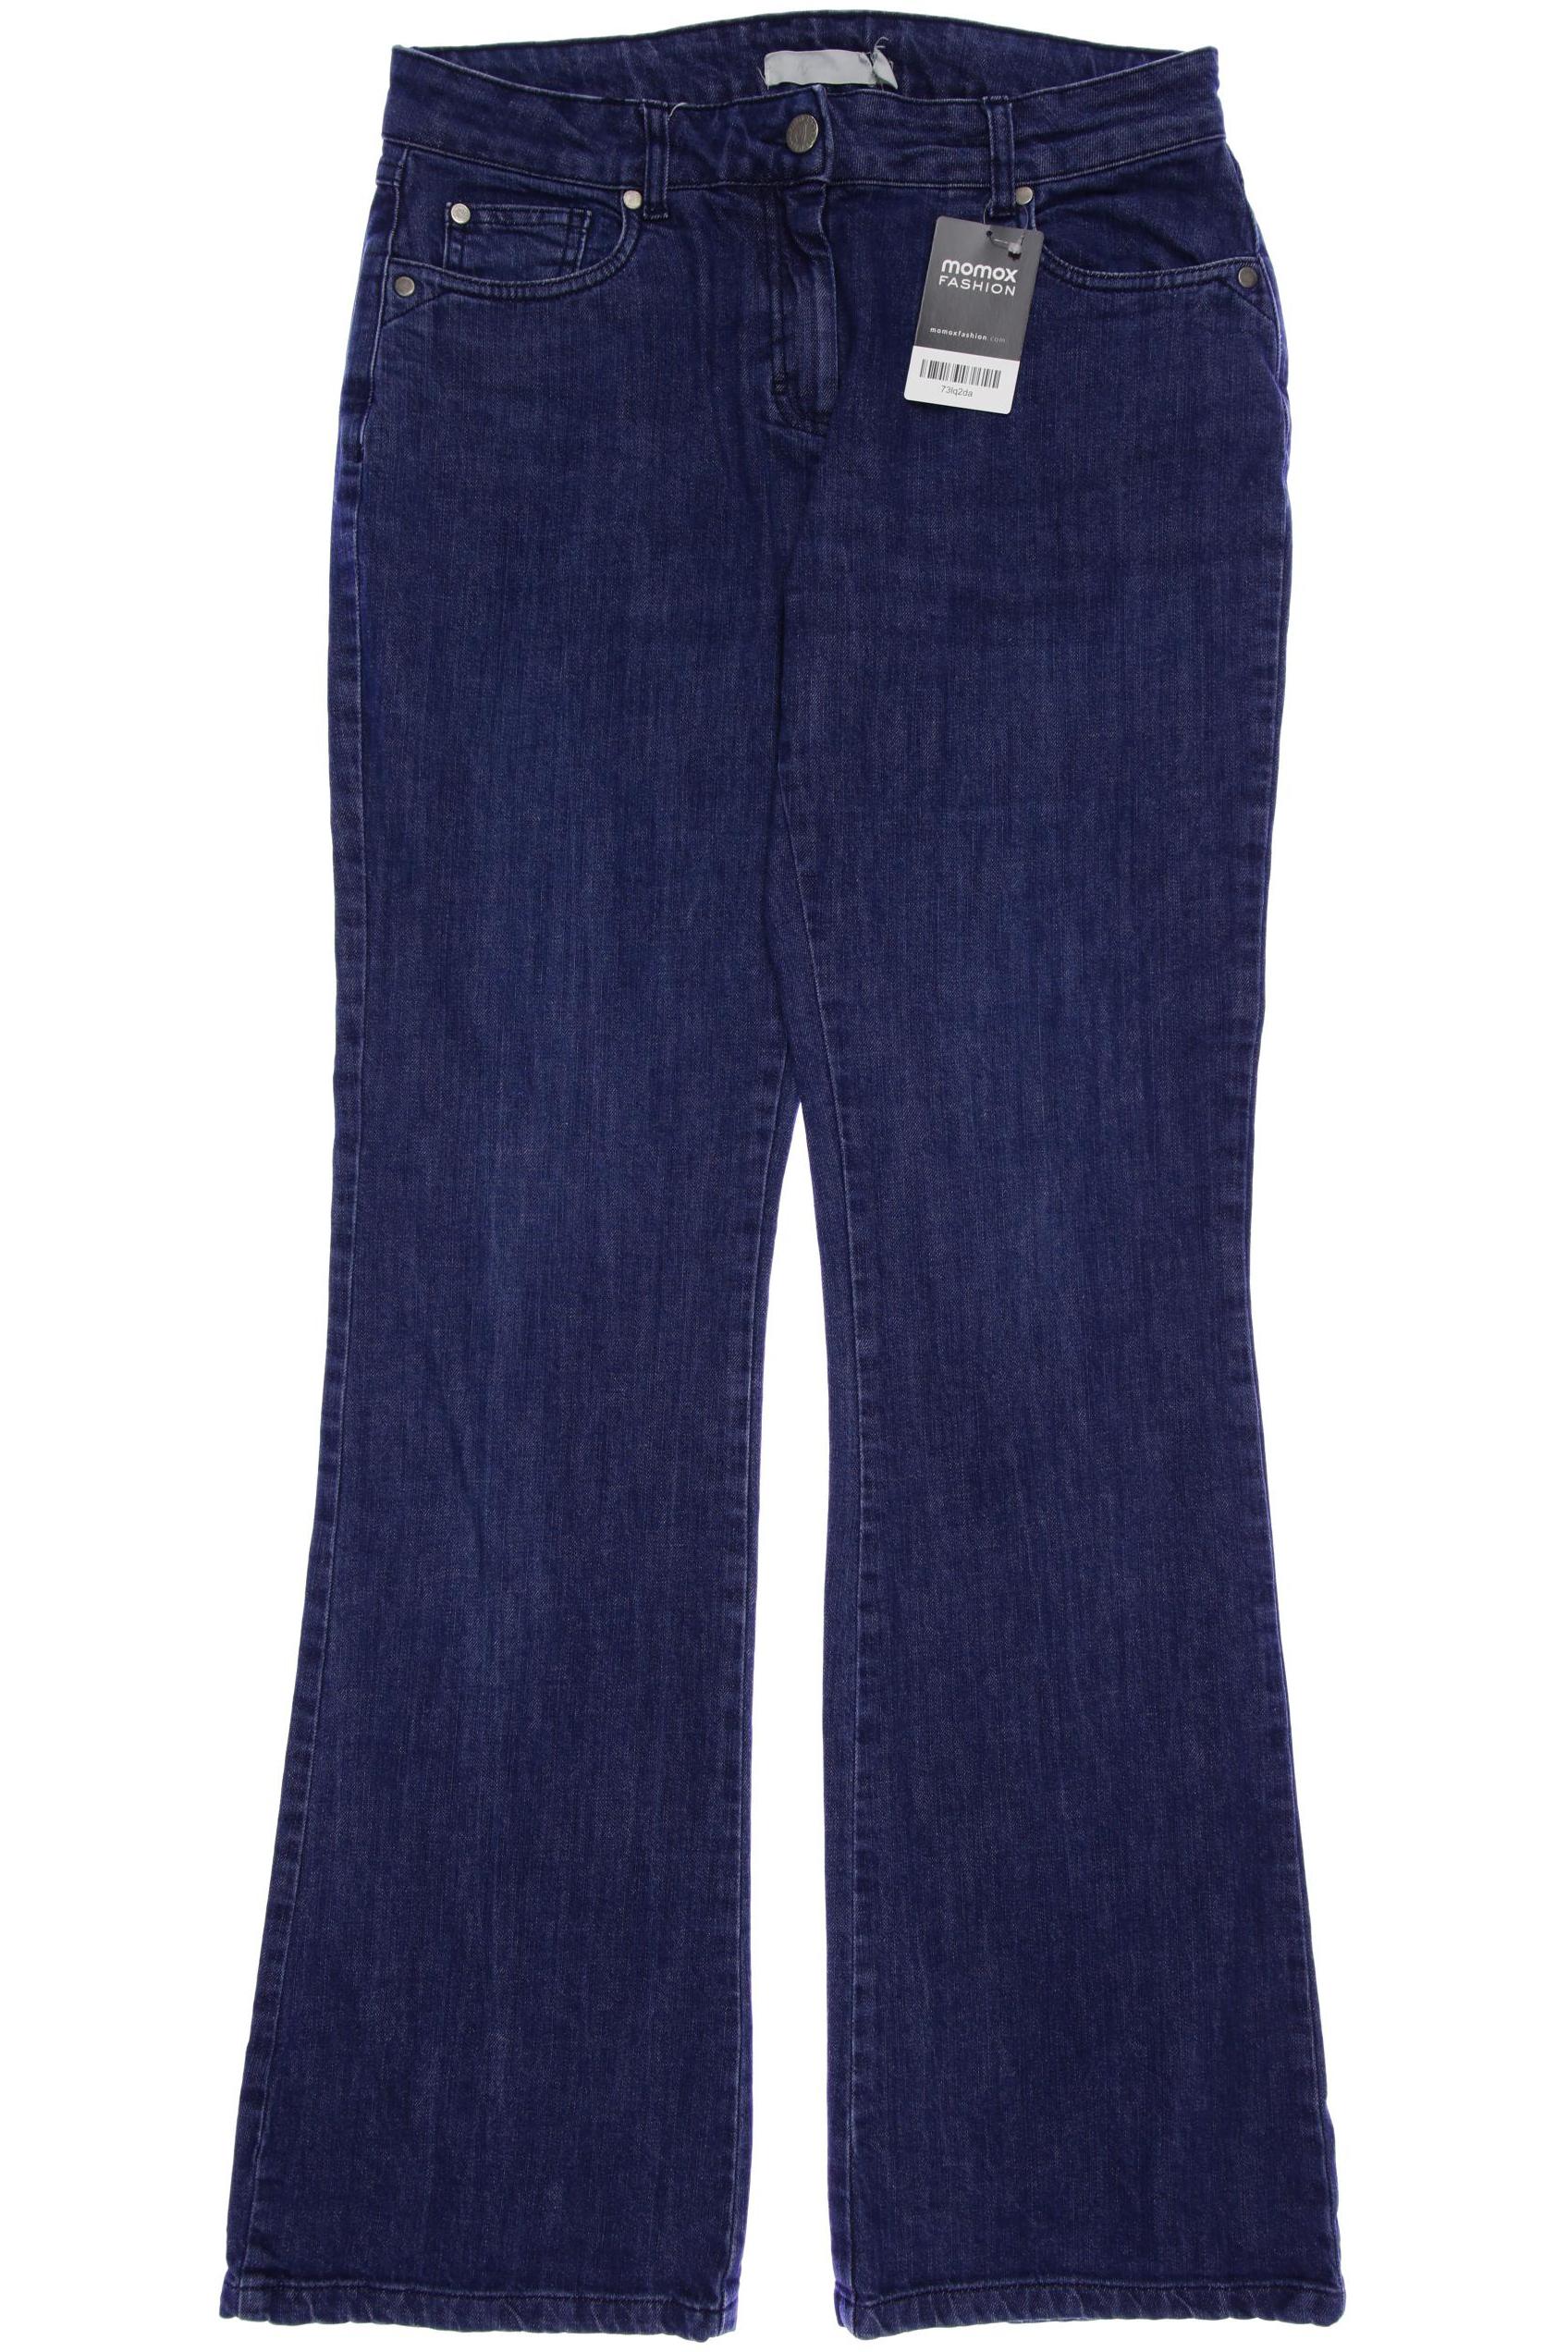 Maas Damen Jeans, marineblau, Gr. 40 von Maas